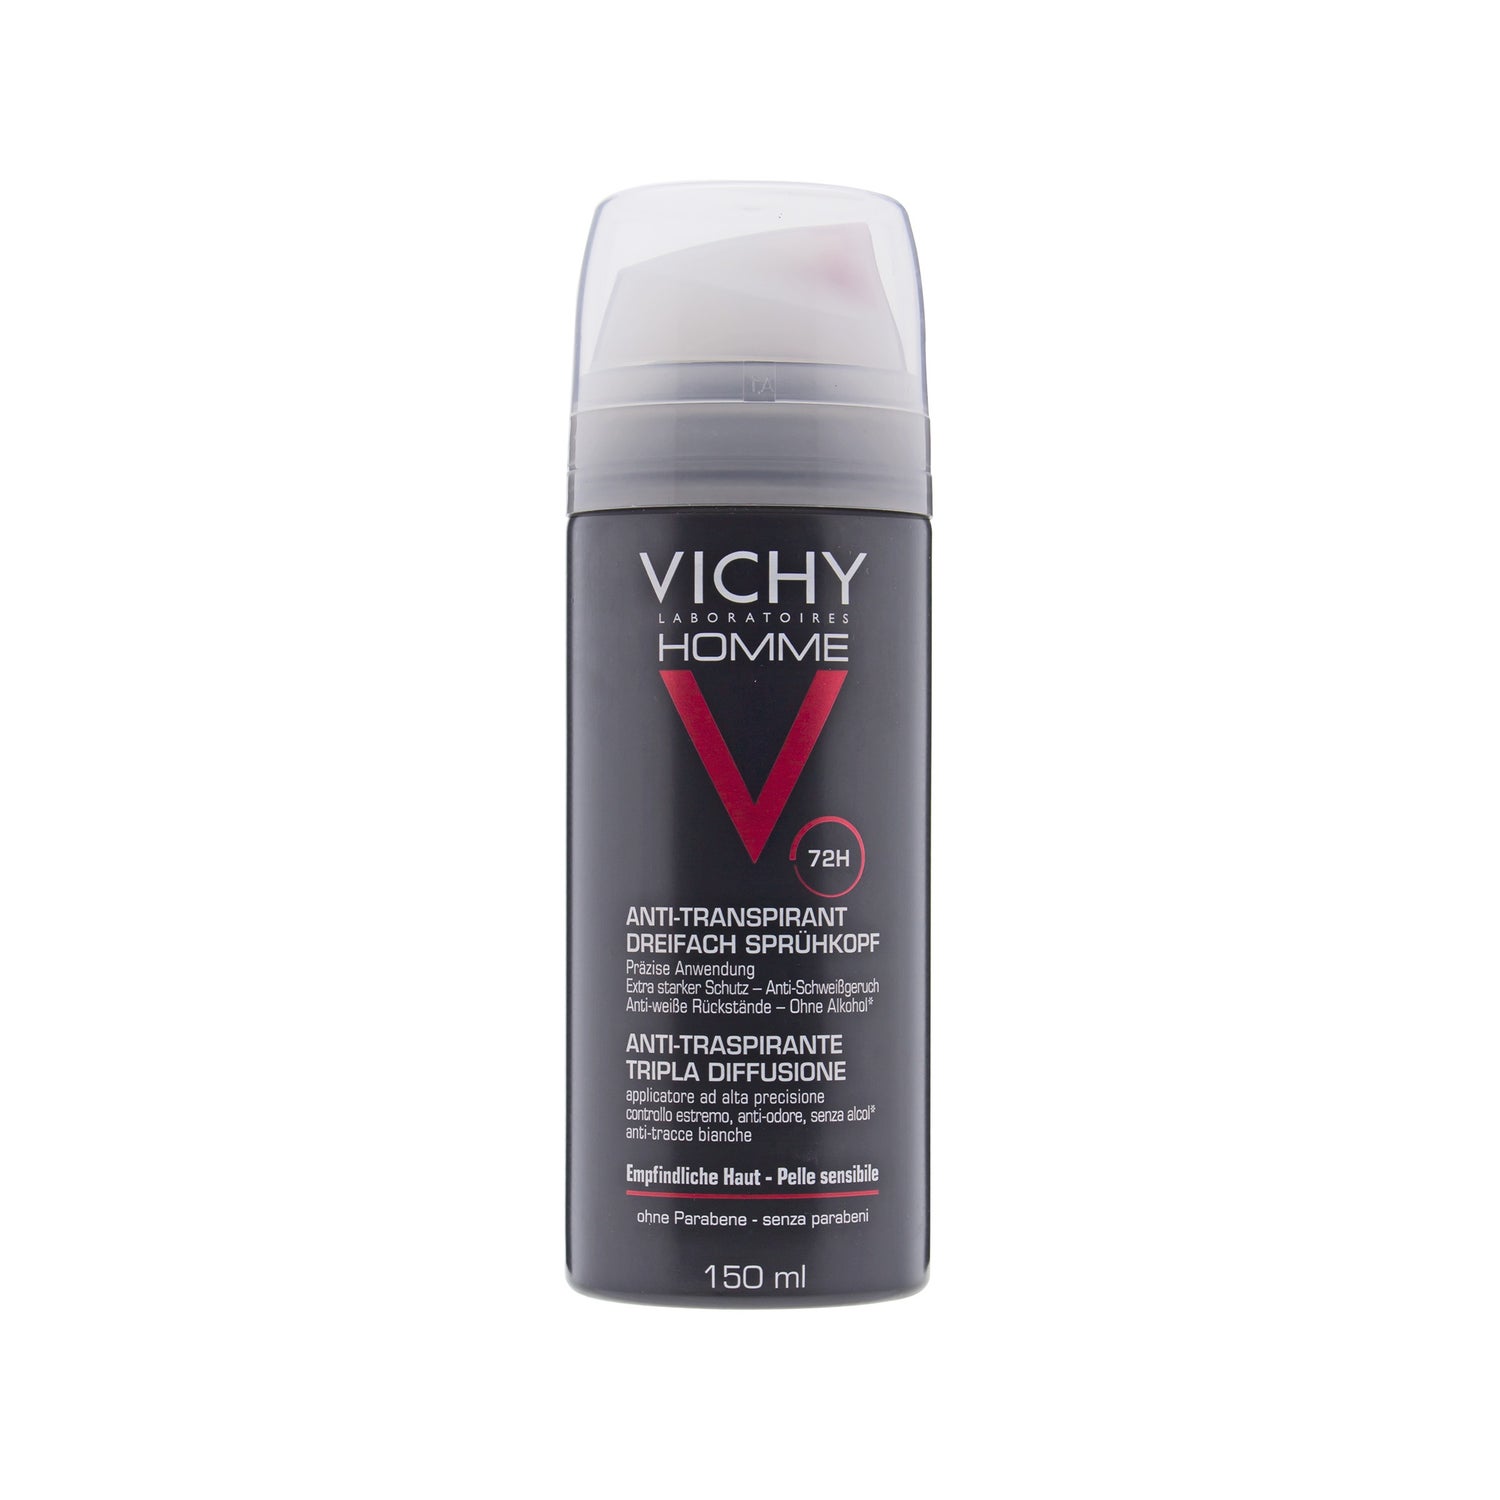 vichy desodorante triple difusi n 150ml